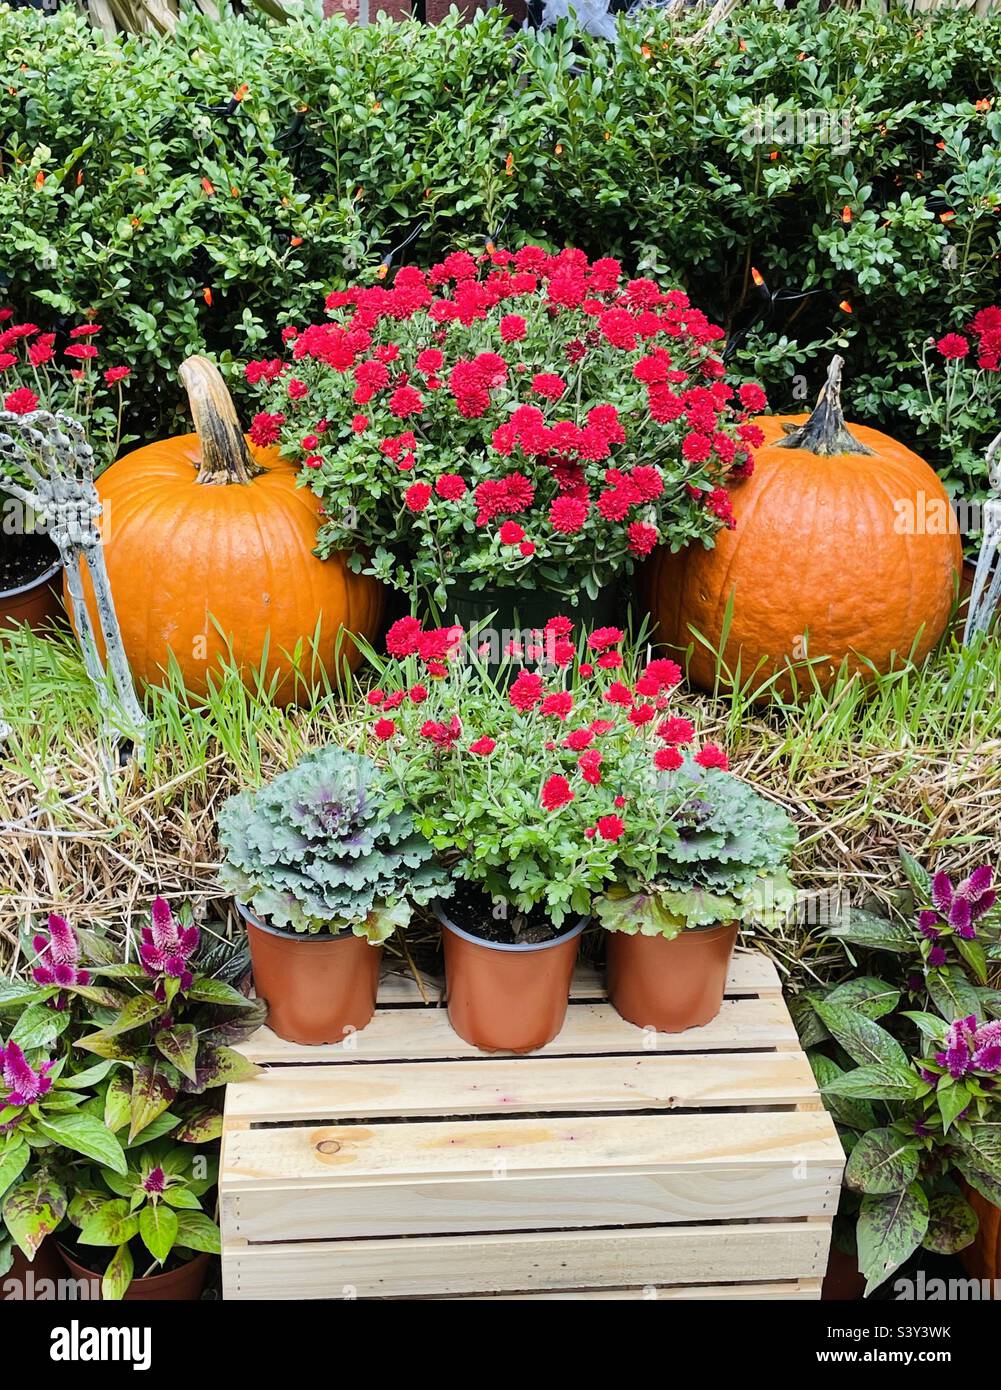 Halloween display of pumpkins and flowers Stock Photo